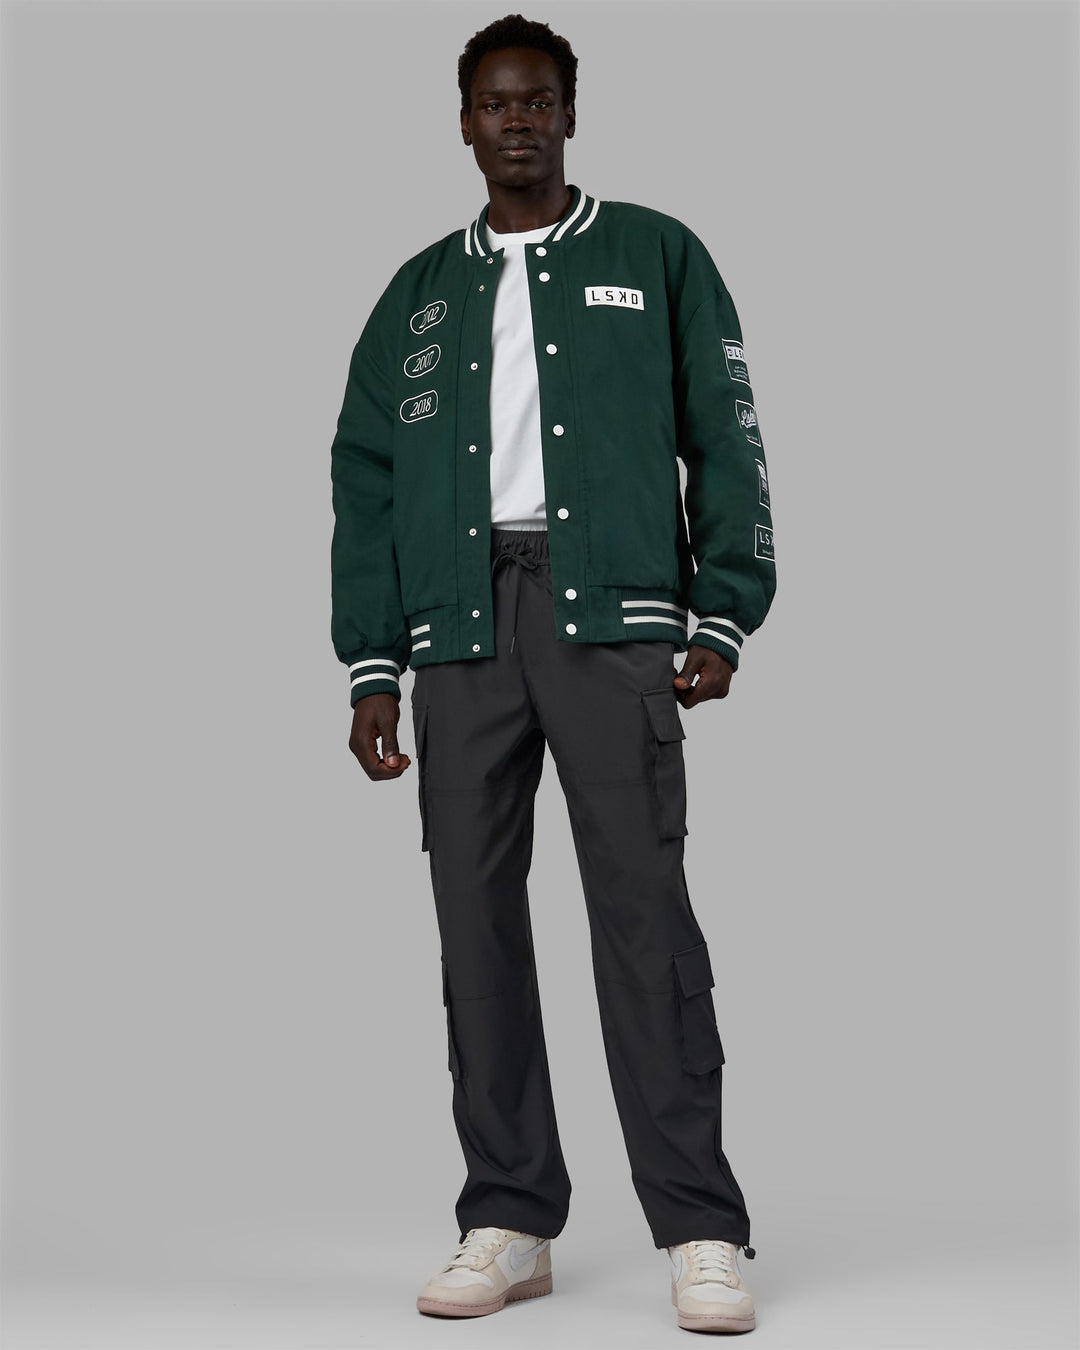 Man wearing Unisex Timeline Jacket - Vital Green-White